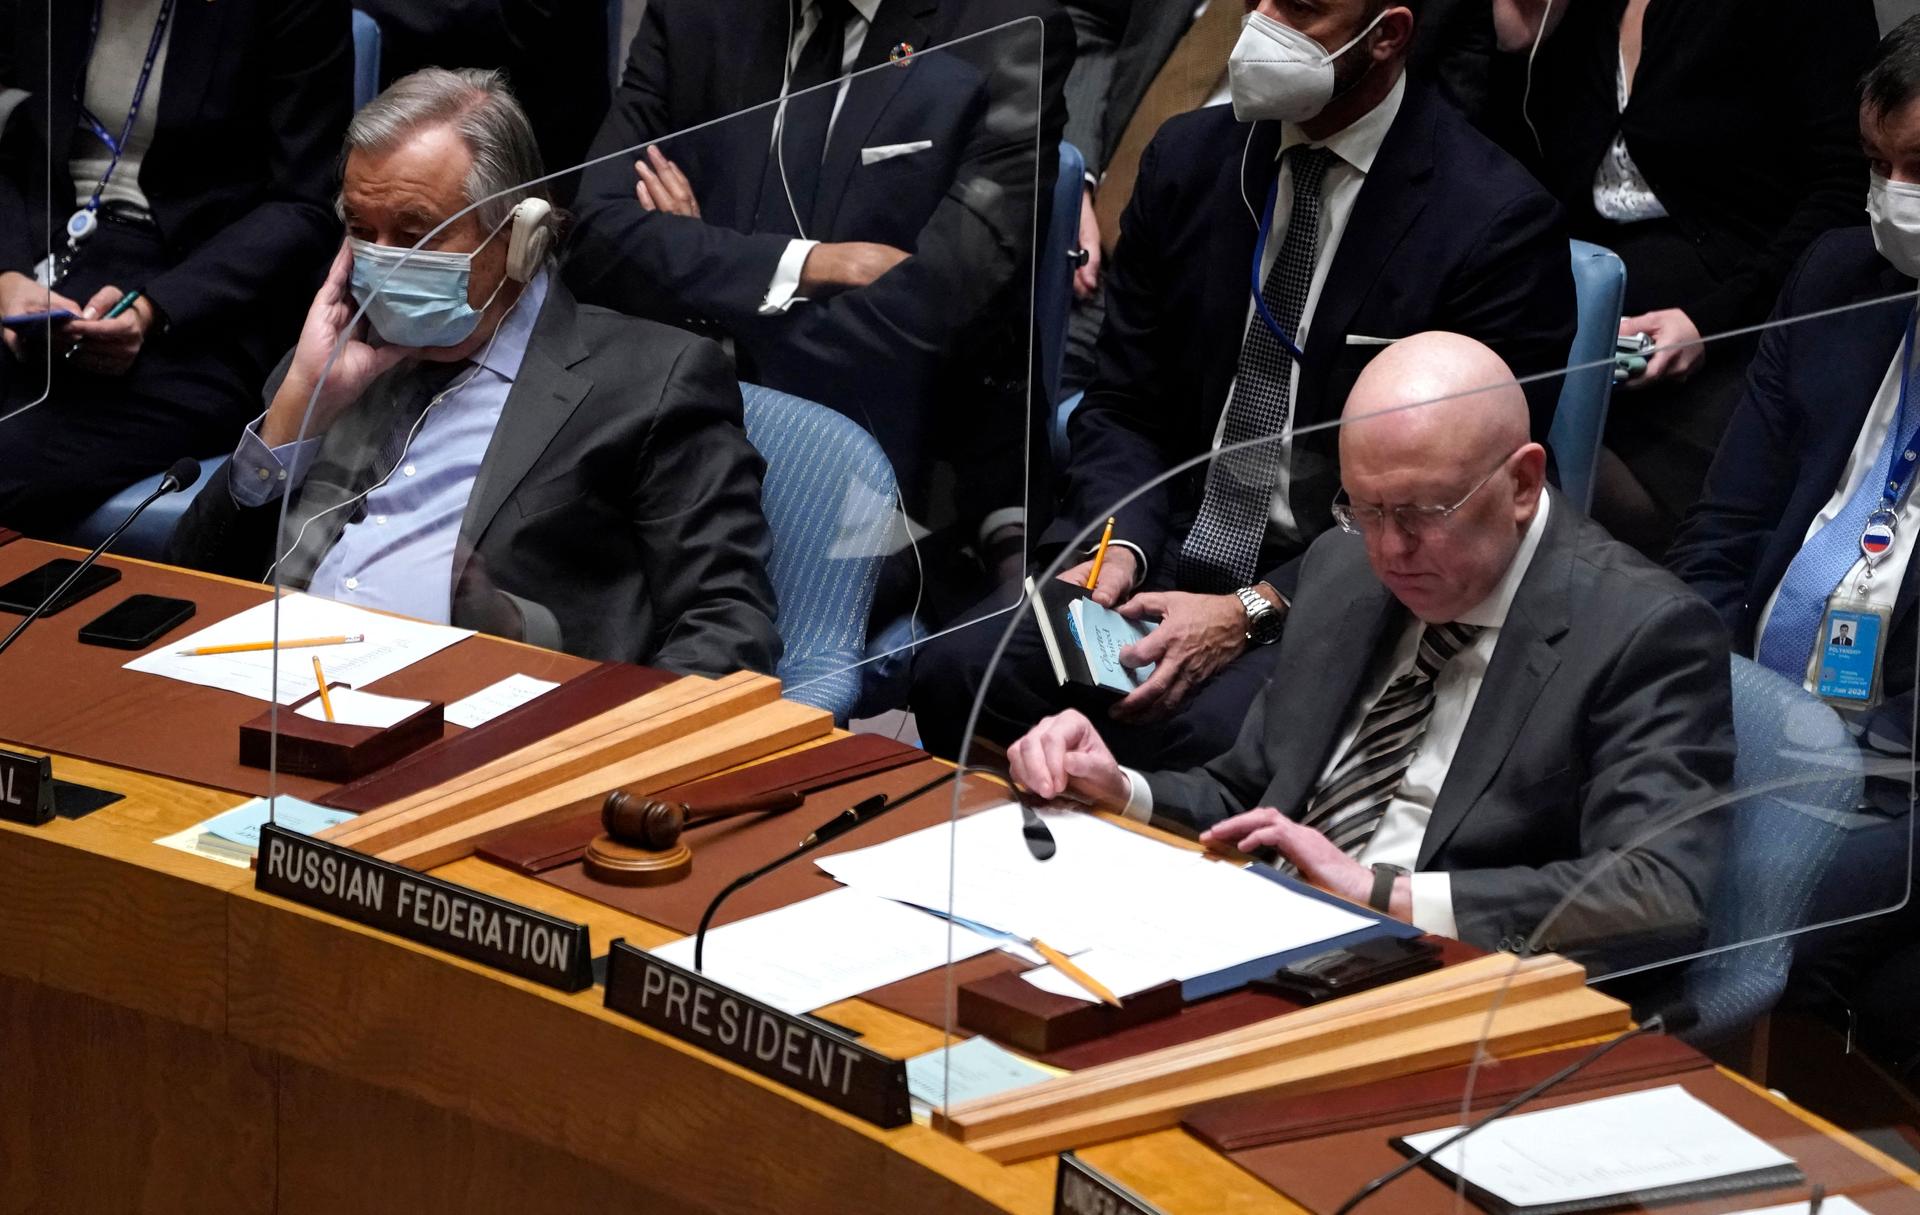 U.N. Secretary-General Antonio Guterres, left, sits next to Russian ambassador Vasily Nebenzya during an emergency U.N. Security Council meeting on Ukraine on Feb. 23, 2022.